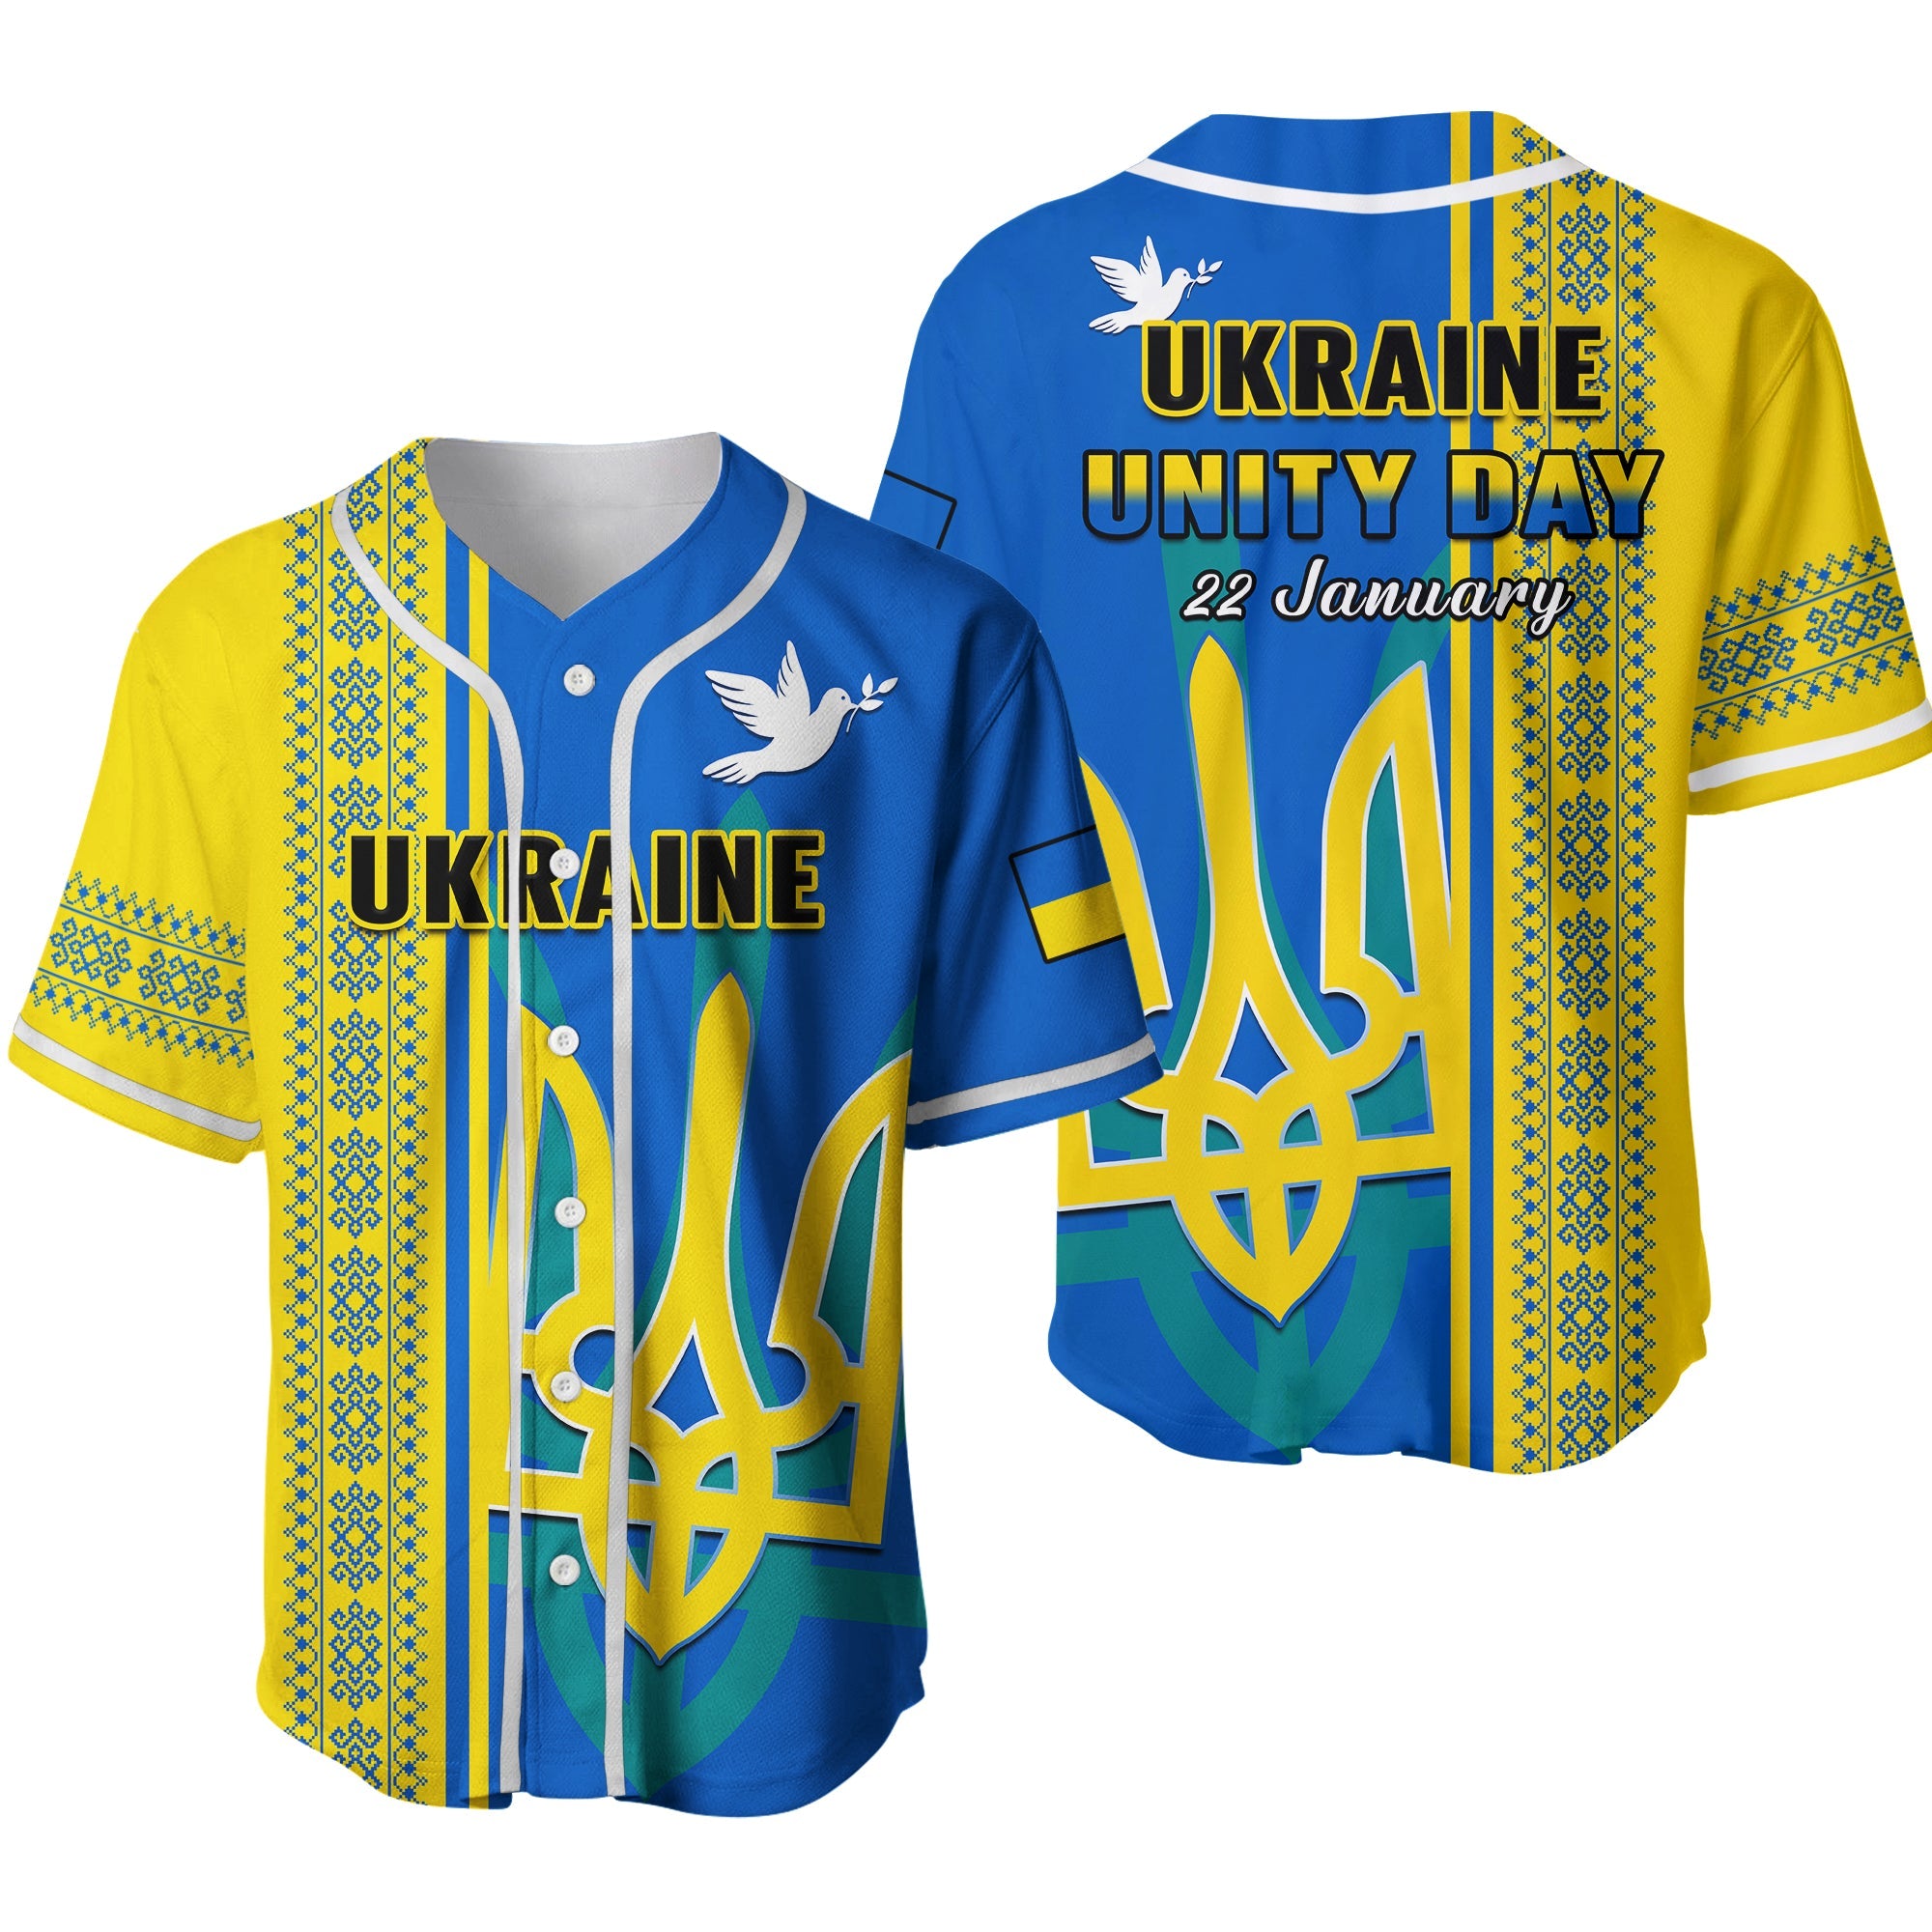 ukraine-unity-day-baseball-jersey-vyshyvanka-ukrainian-coat-of-arms-ver02